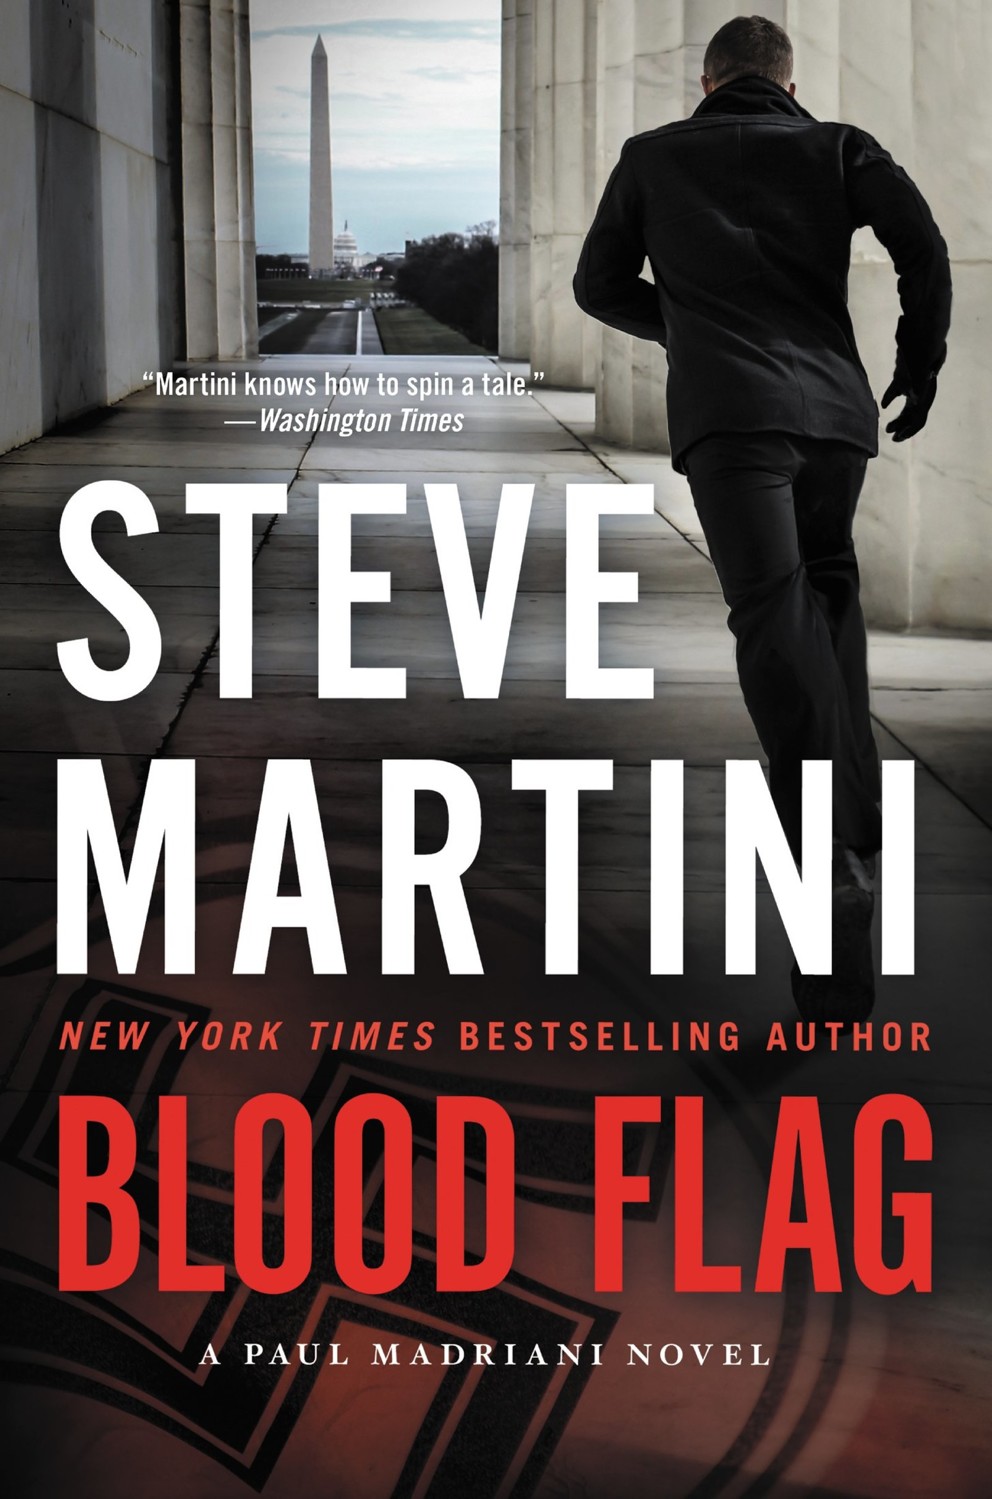 Blood Flag: A Paul Madriani Novel by Steve Martini